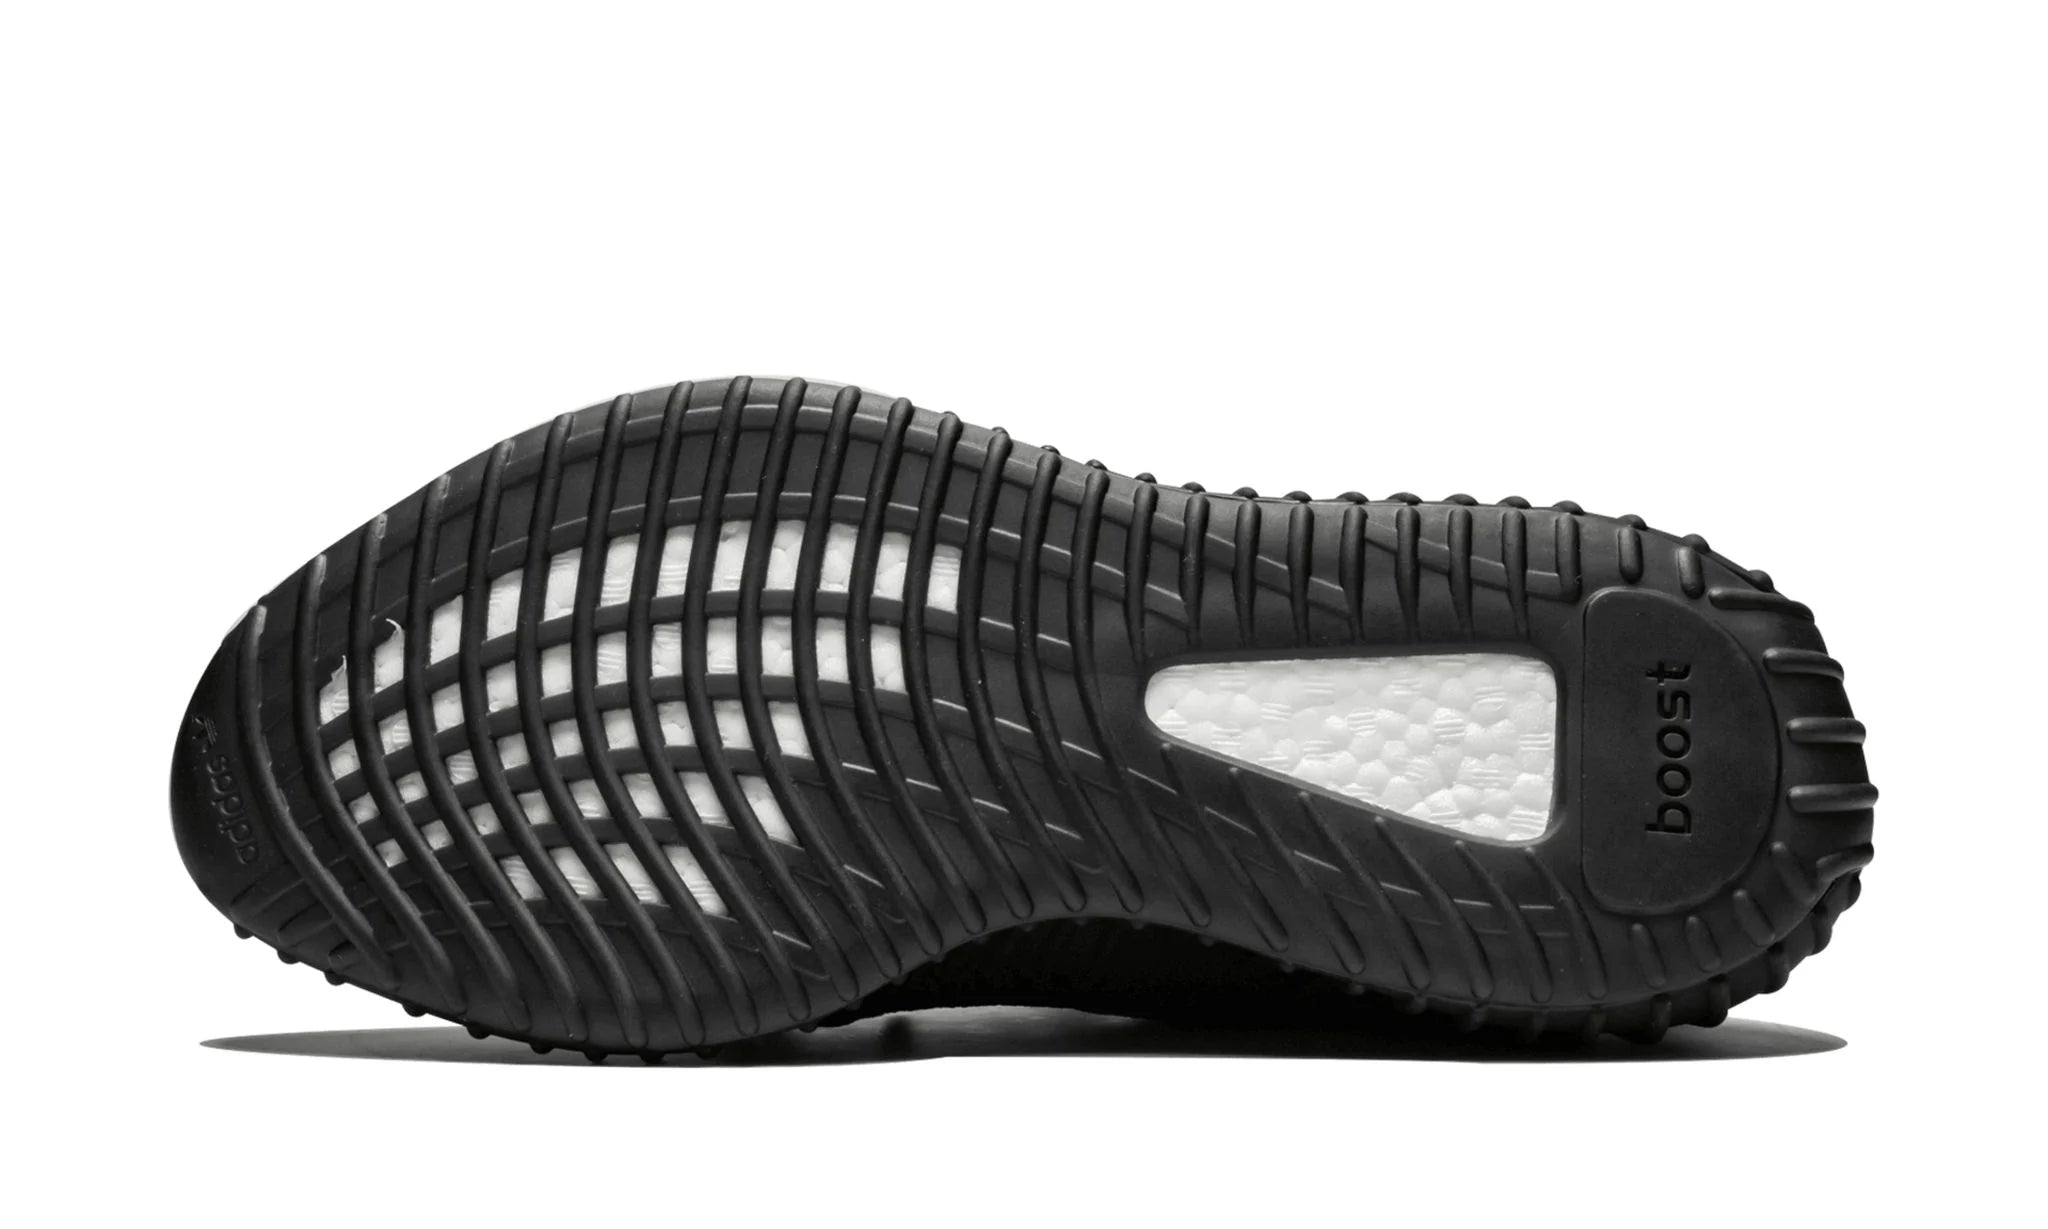 Adidas Yeezy Boost 350 V2 Static Black (Reflective) - Yeezy 350 - Pirri